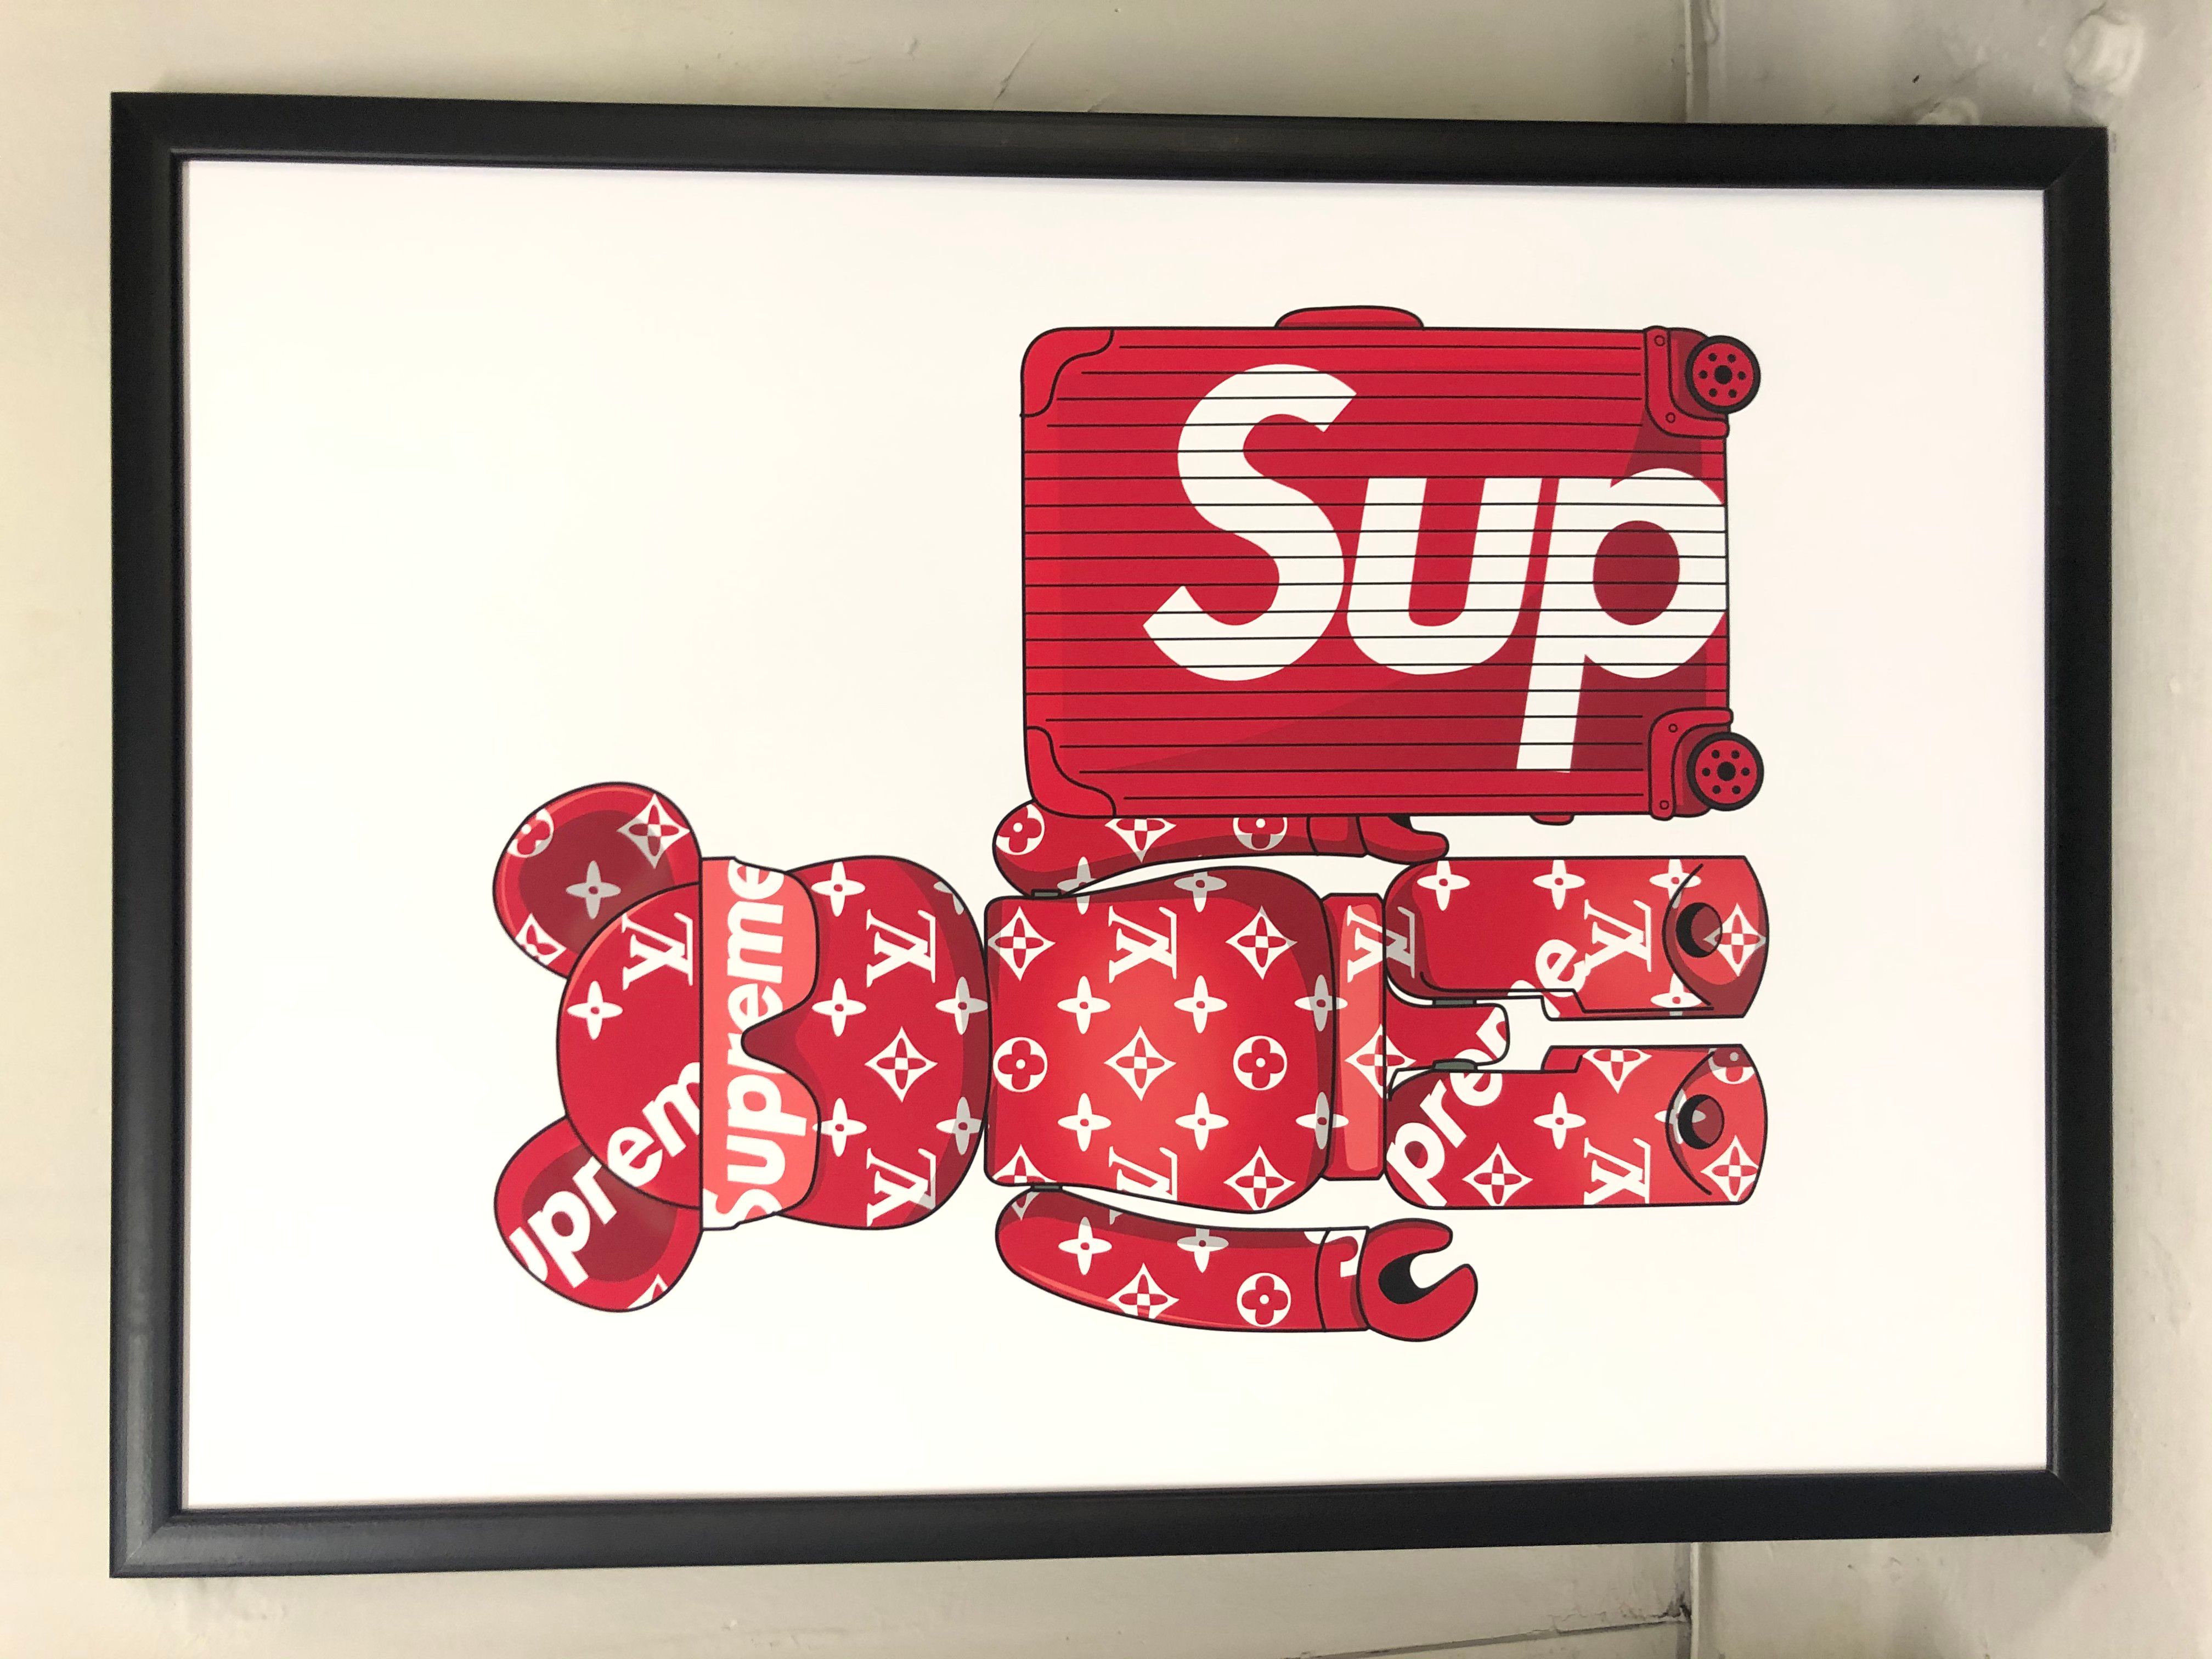 Supreme Supreme x Bearbrick Limited Poster